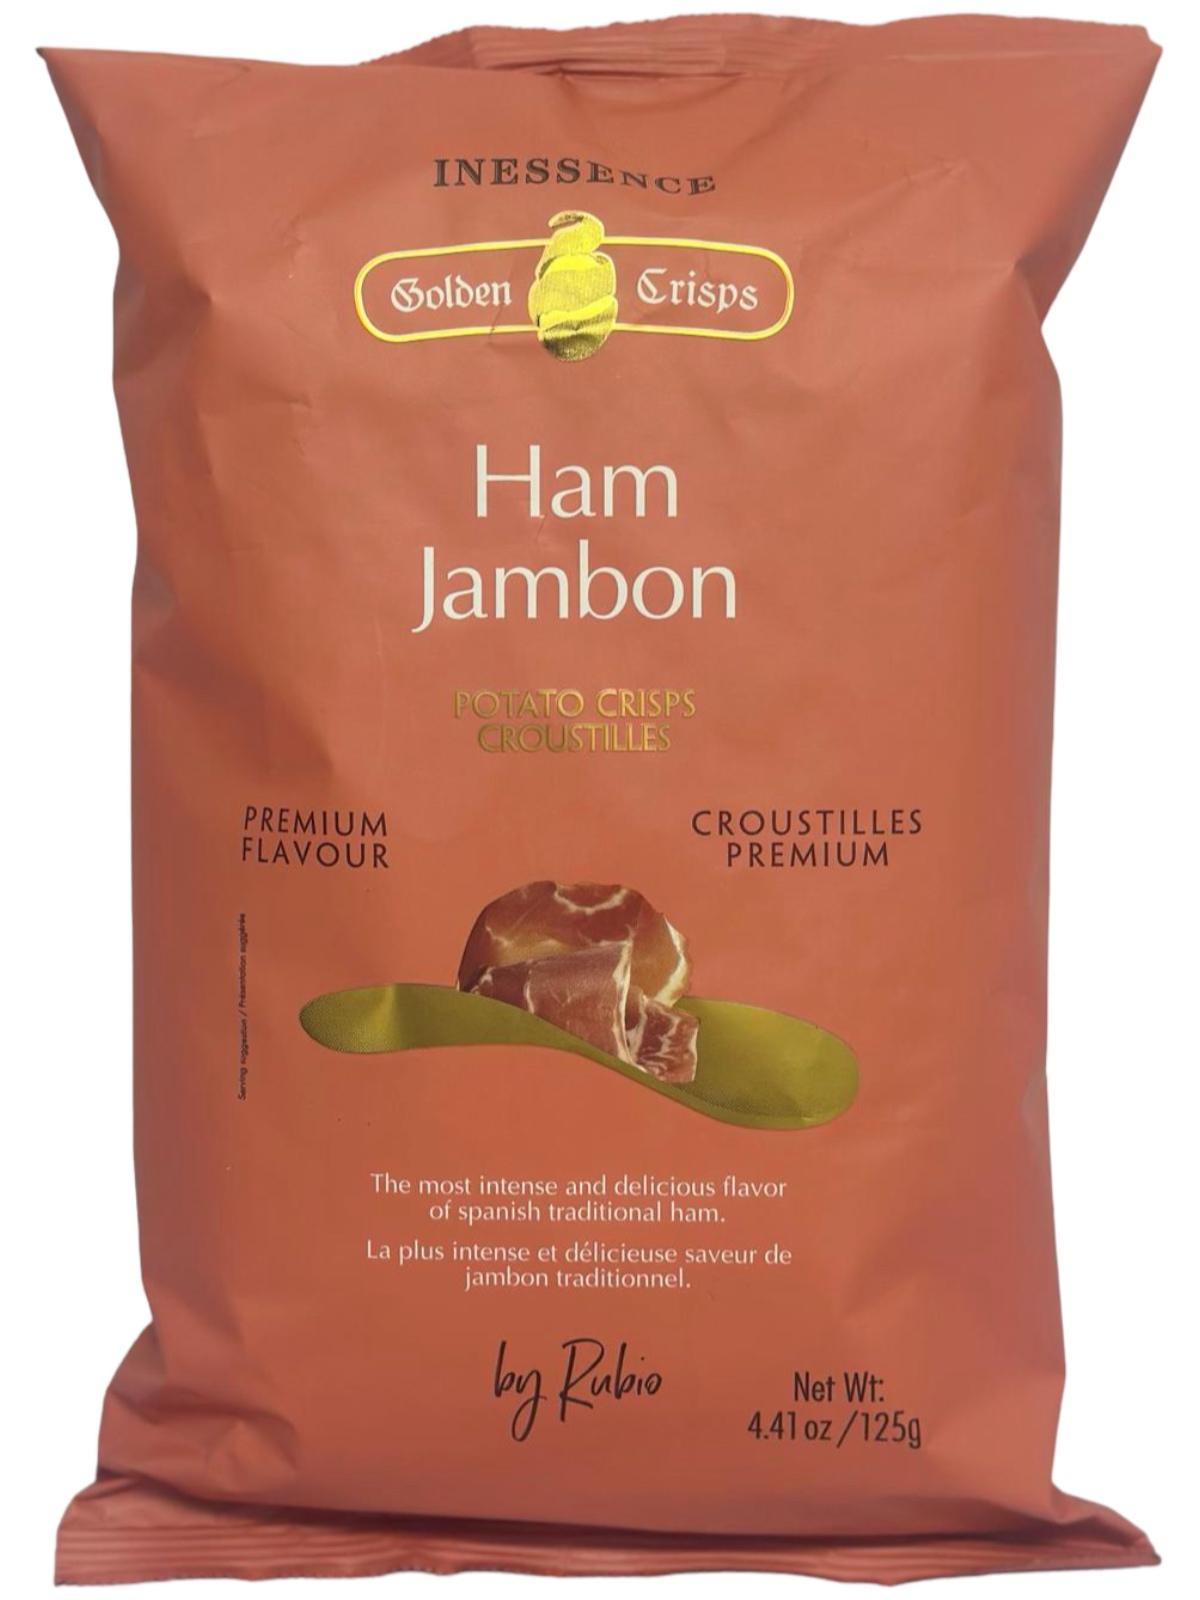 Inessence Jamon Flavoured Potato Crisps 125g - 3 Pack 375g total